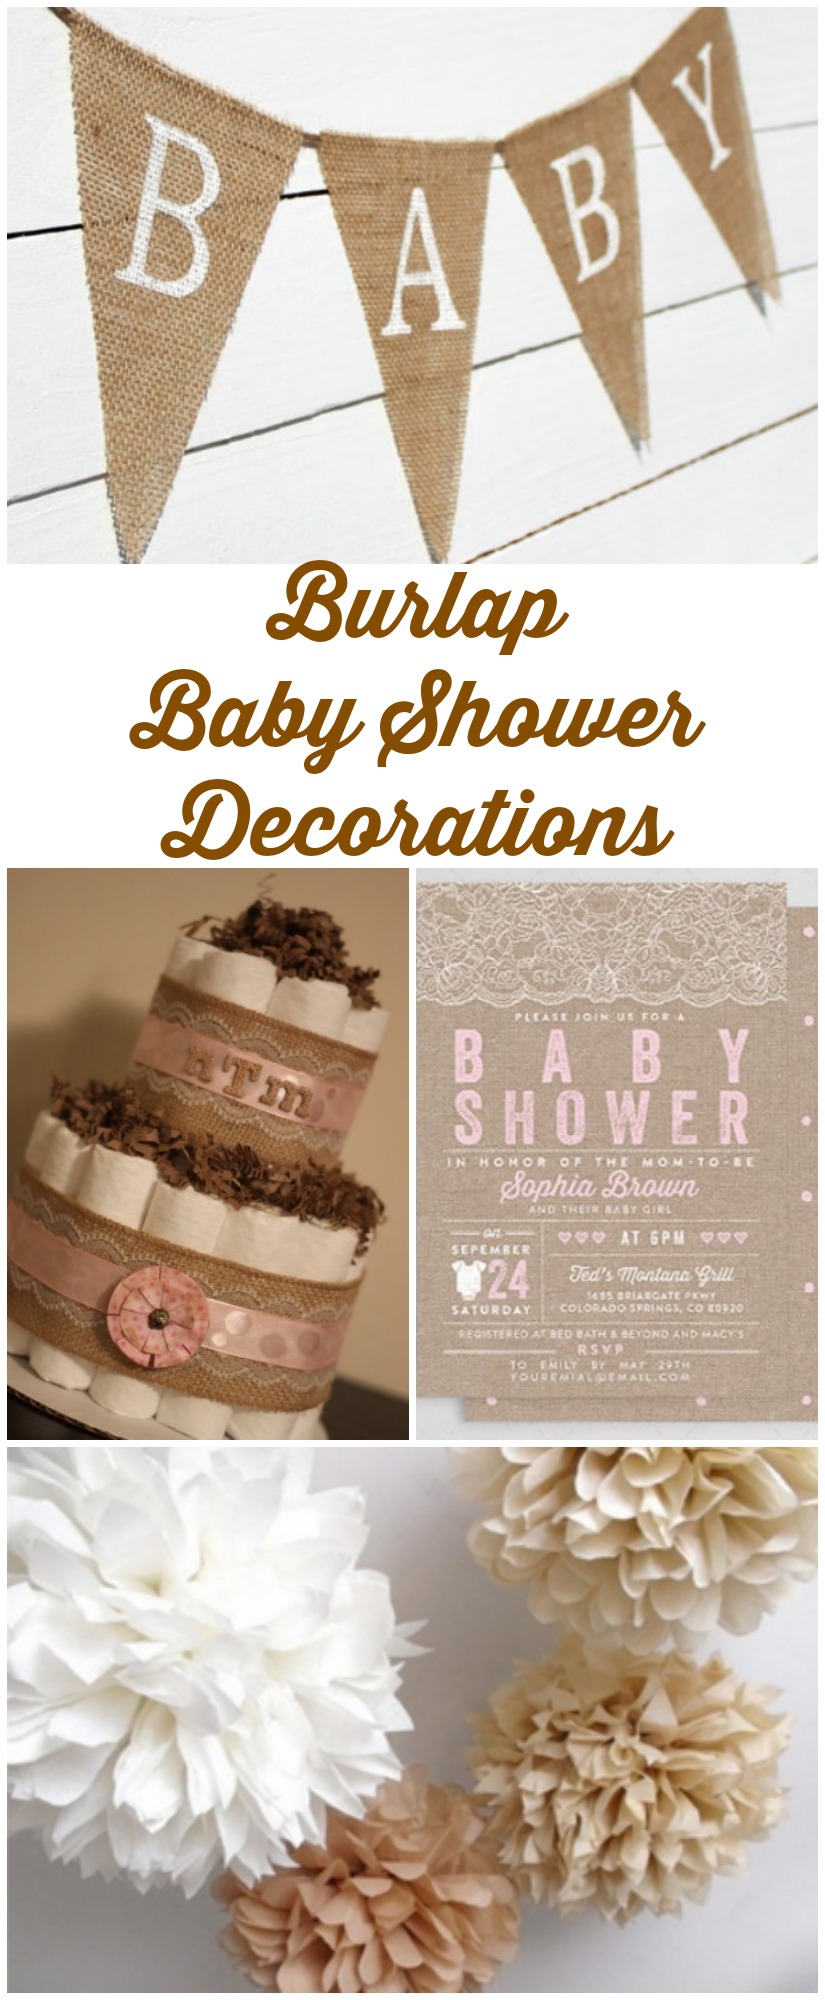 Burlap Baby Shower Decorations - Rustic Baby Chic
 Burlap Baby Shower Ideas